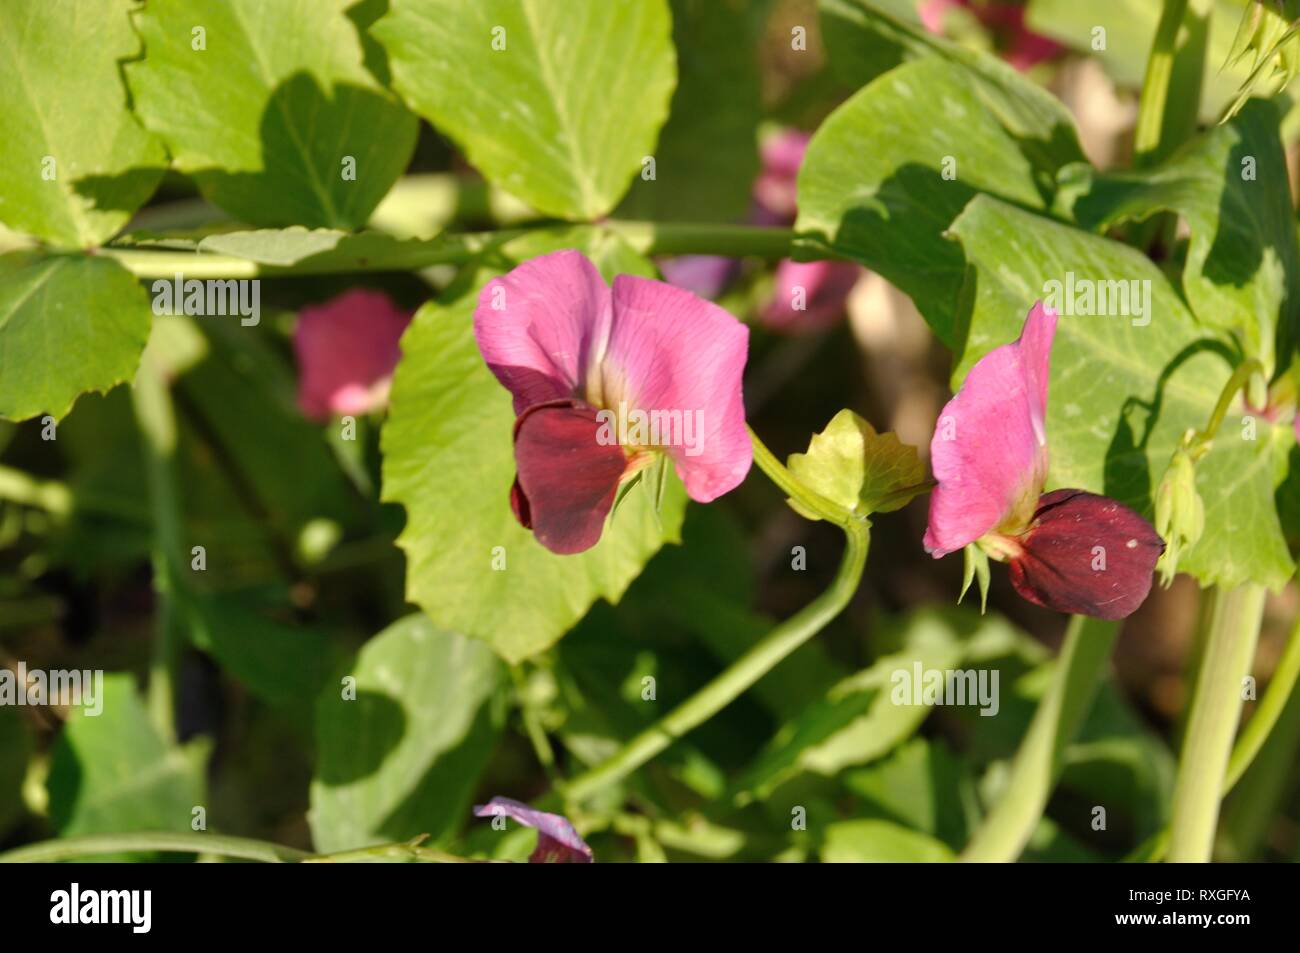 Peas  flowers in a garden Stock Photo